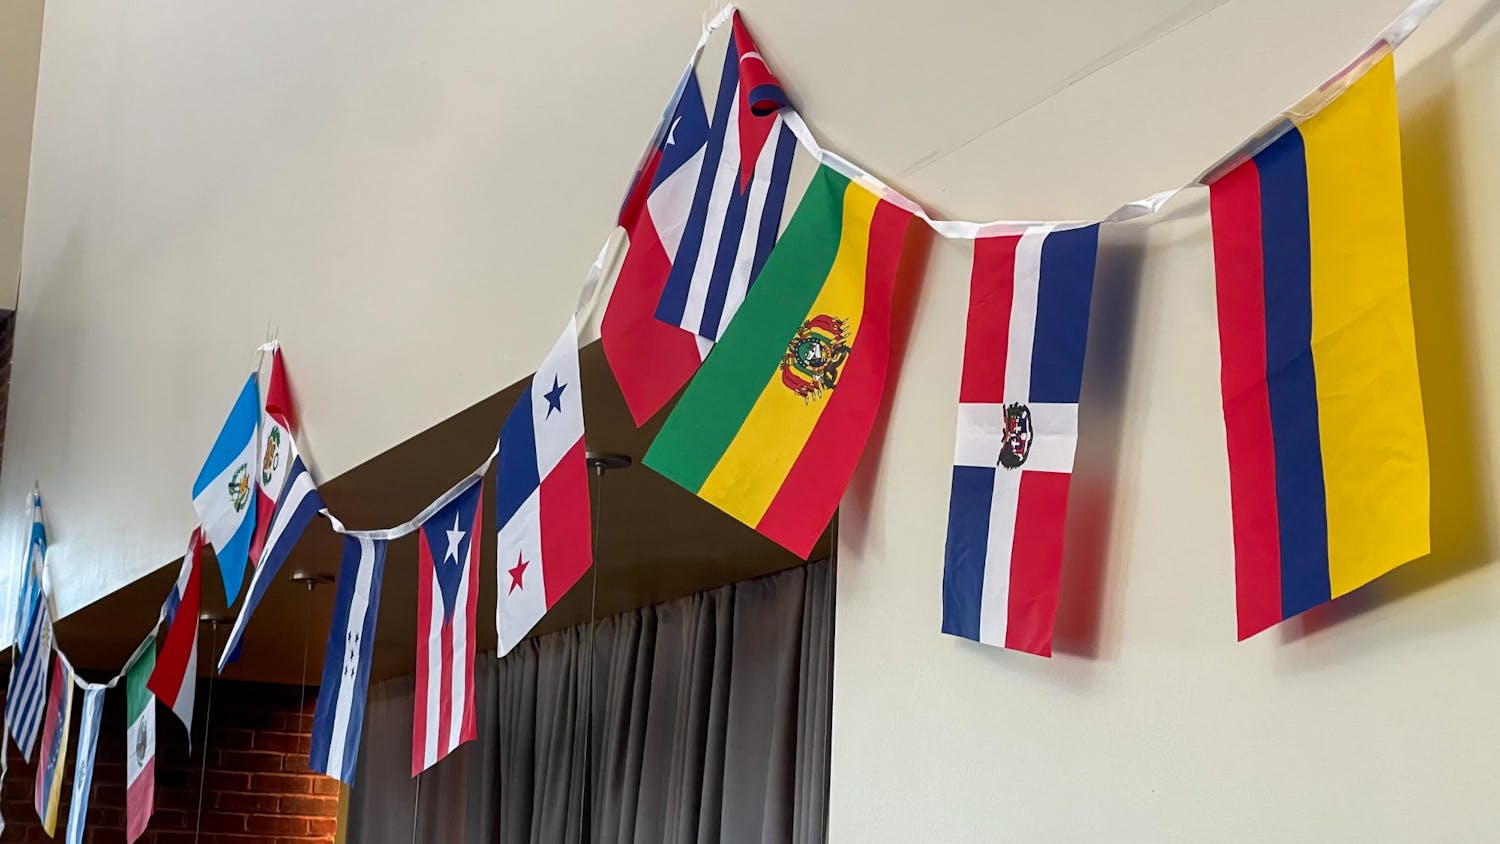 LSA - Hispanic Heritage Flags